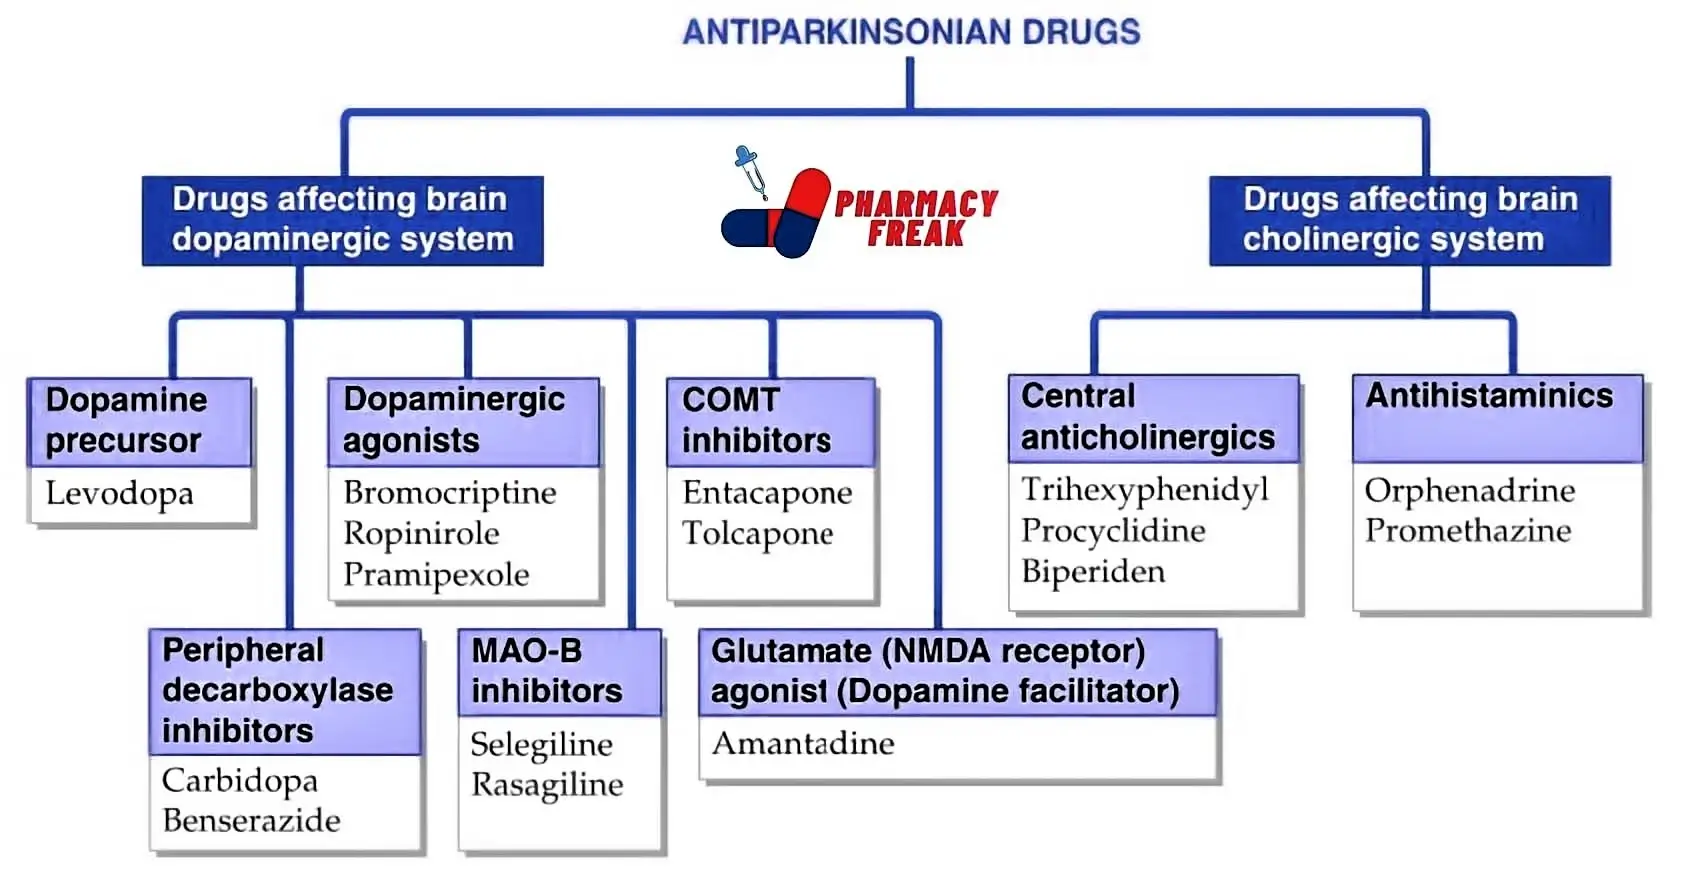 Classification of Antiparkinsonian Drugs